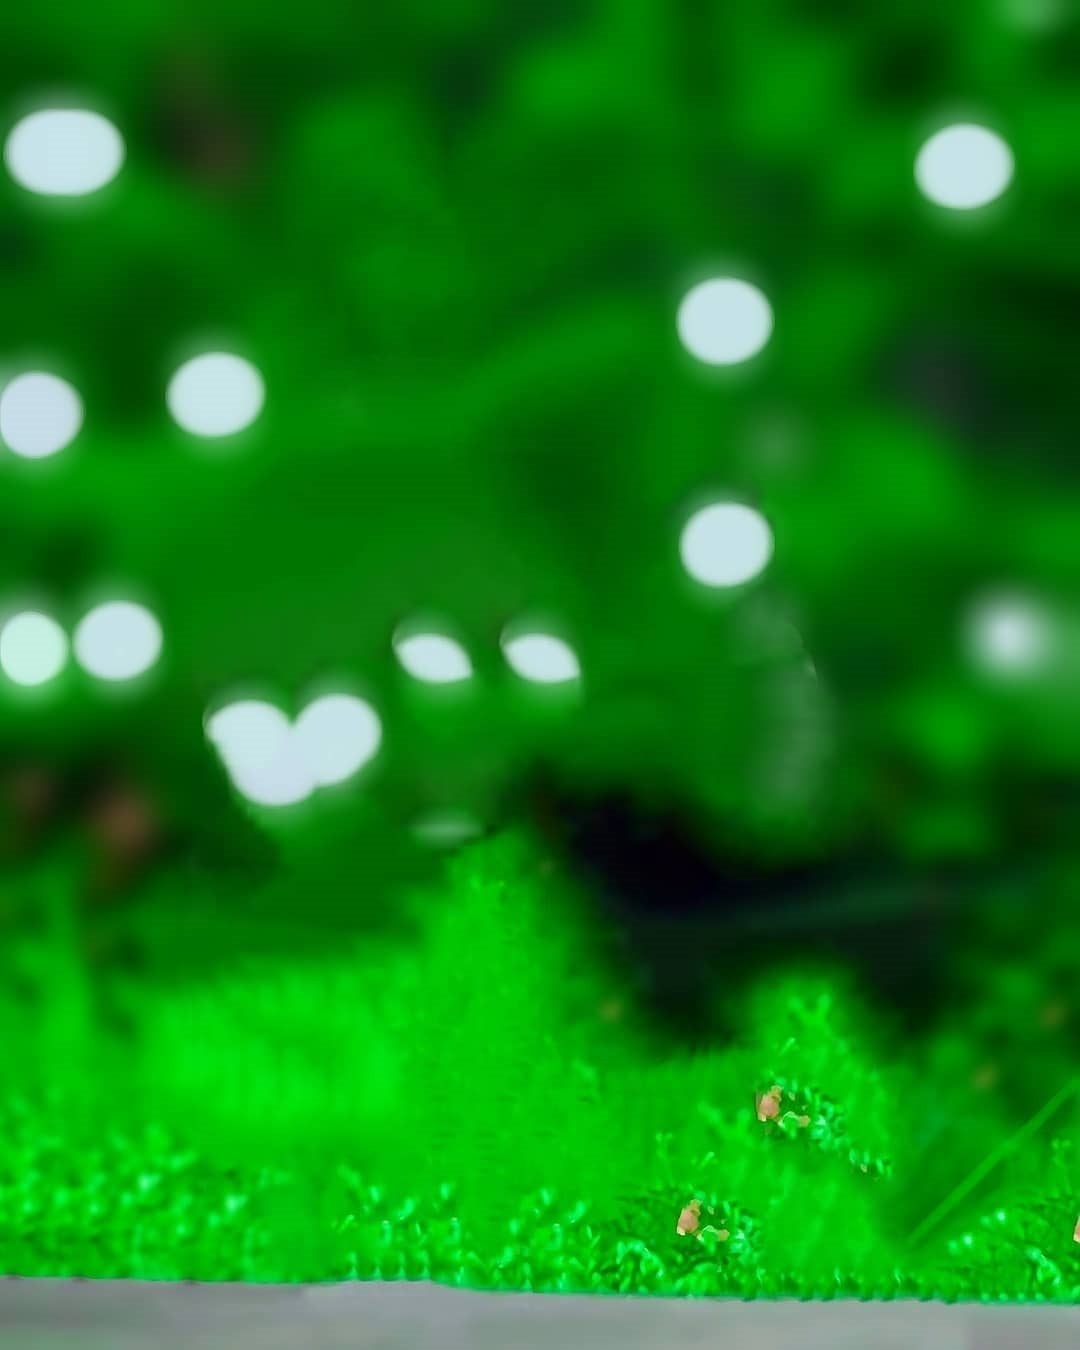  Green Blur PicsArt Editing Background Full HD Download | CBEditz